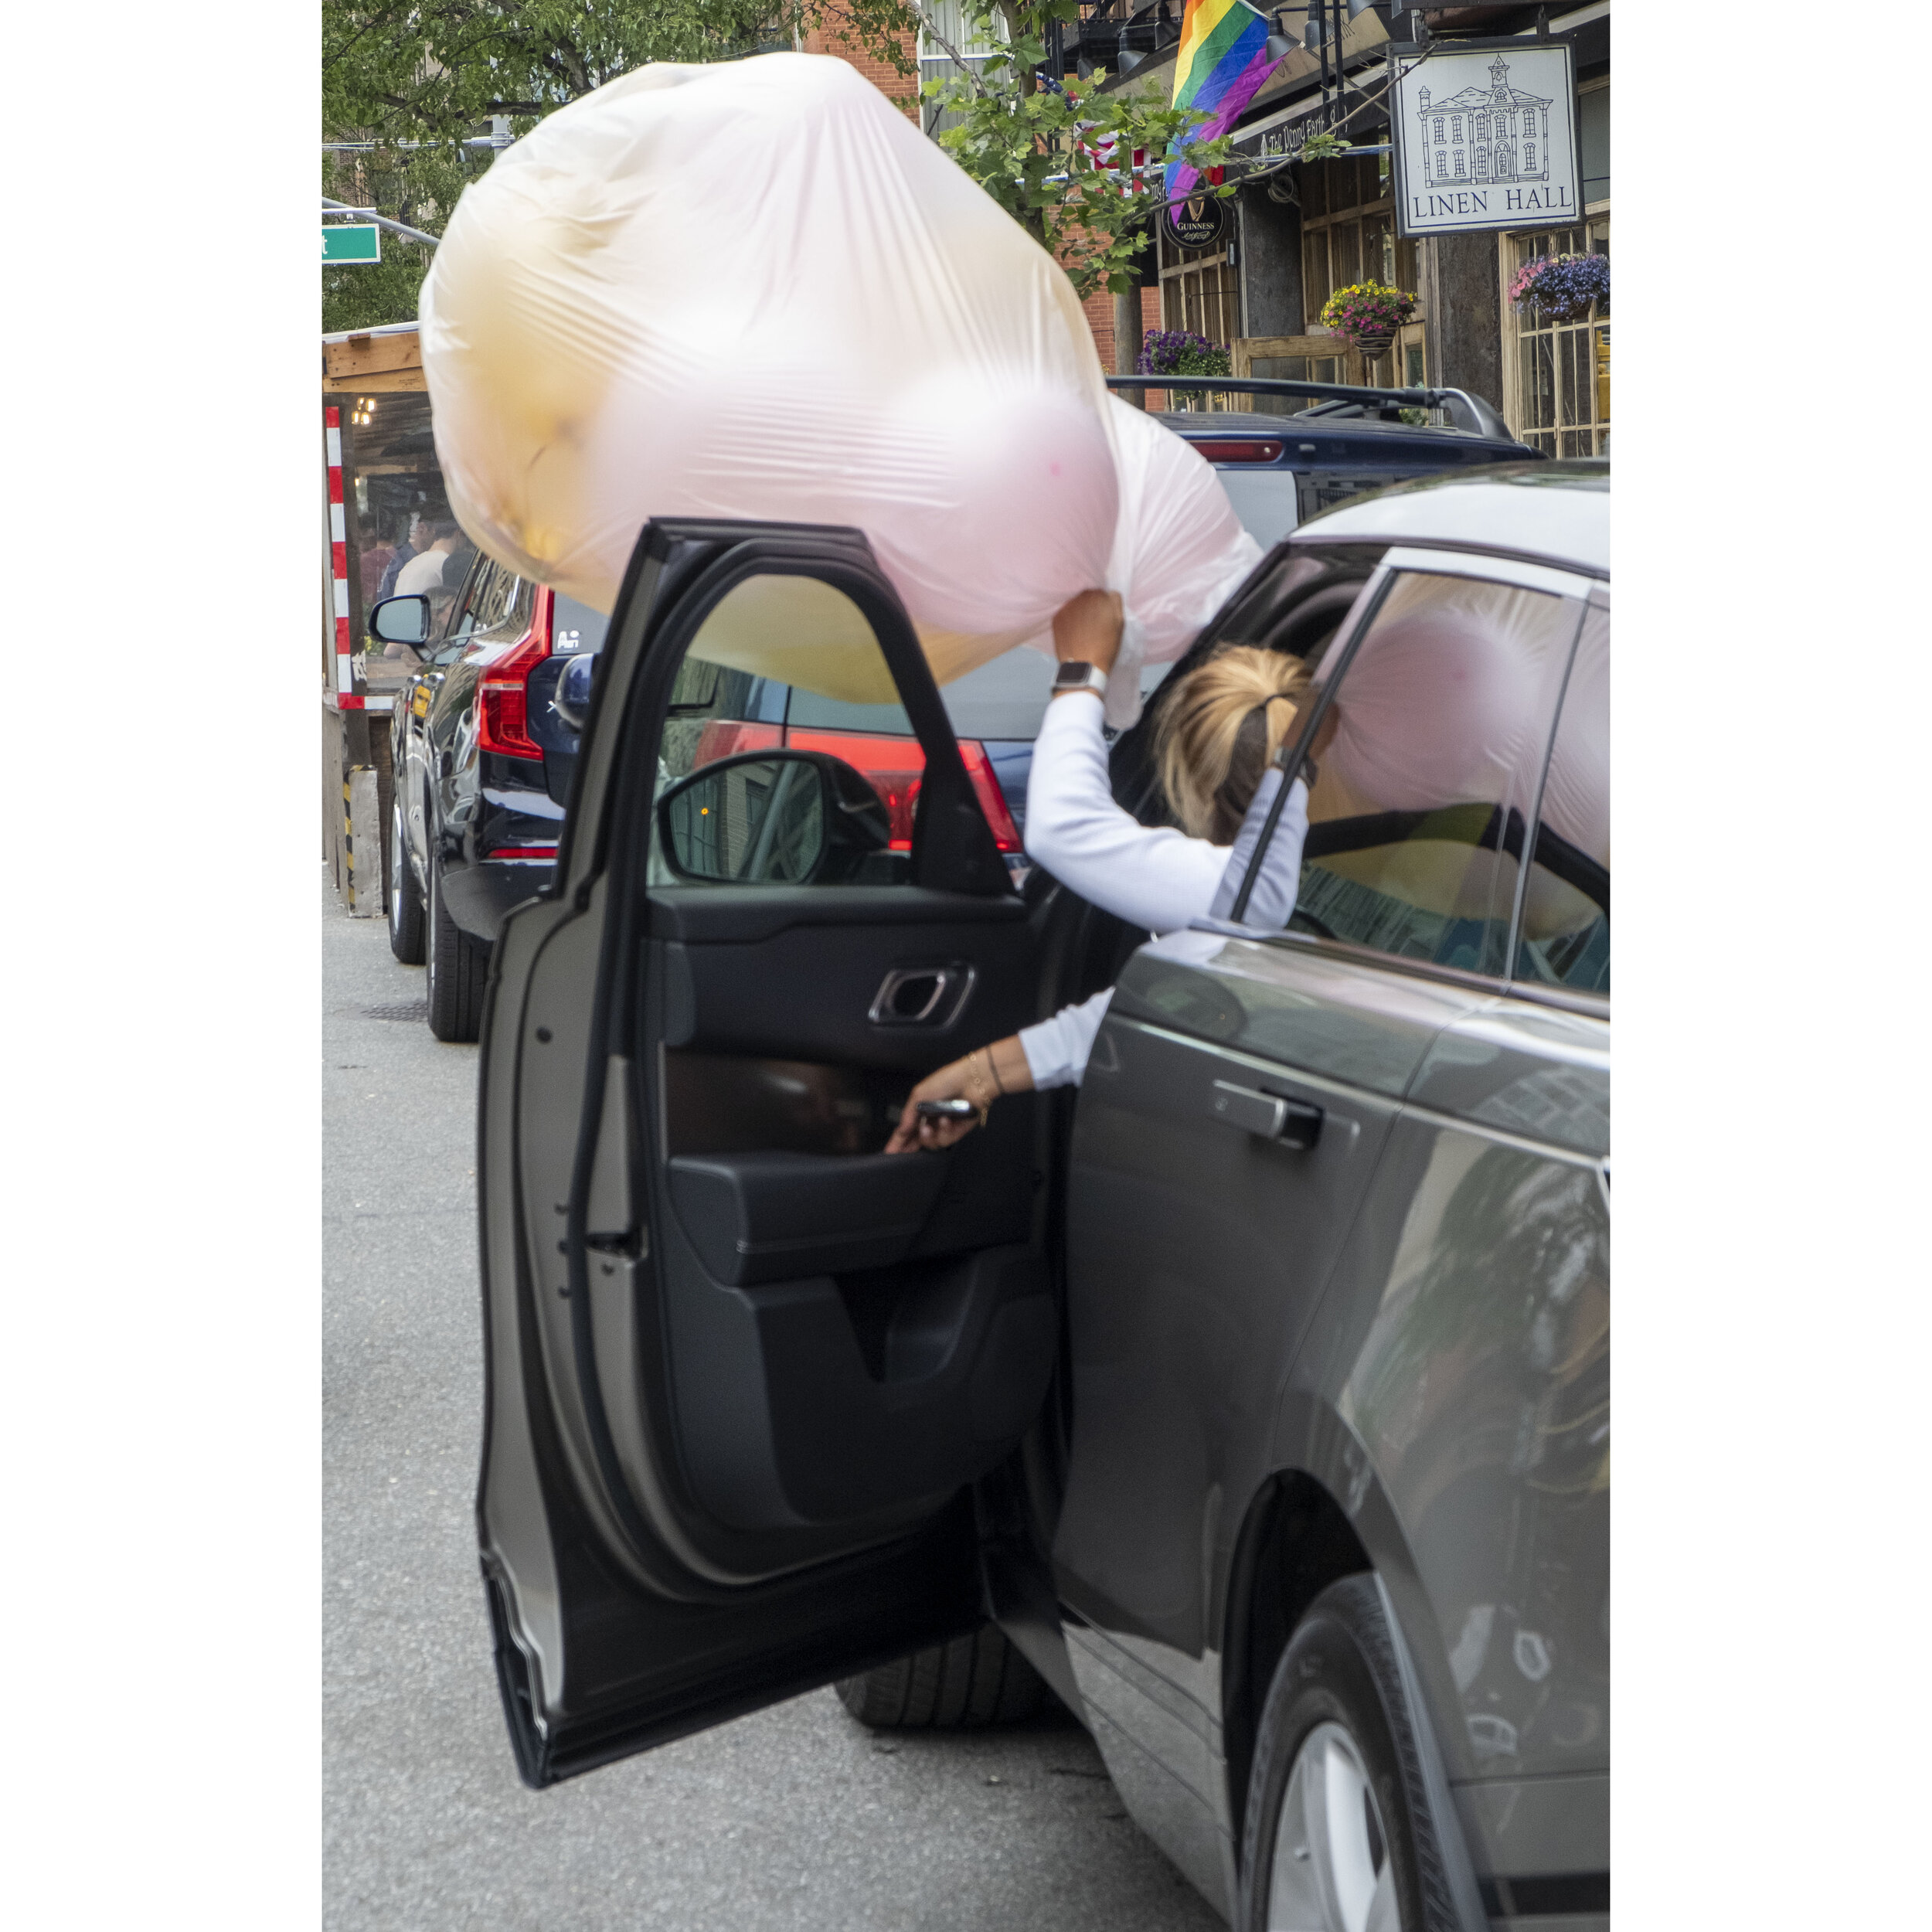 ballons in cars.jpg